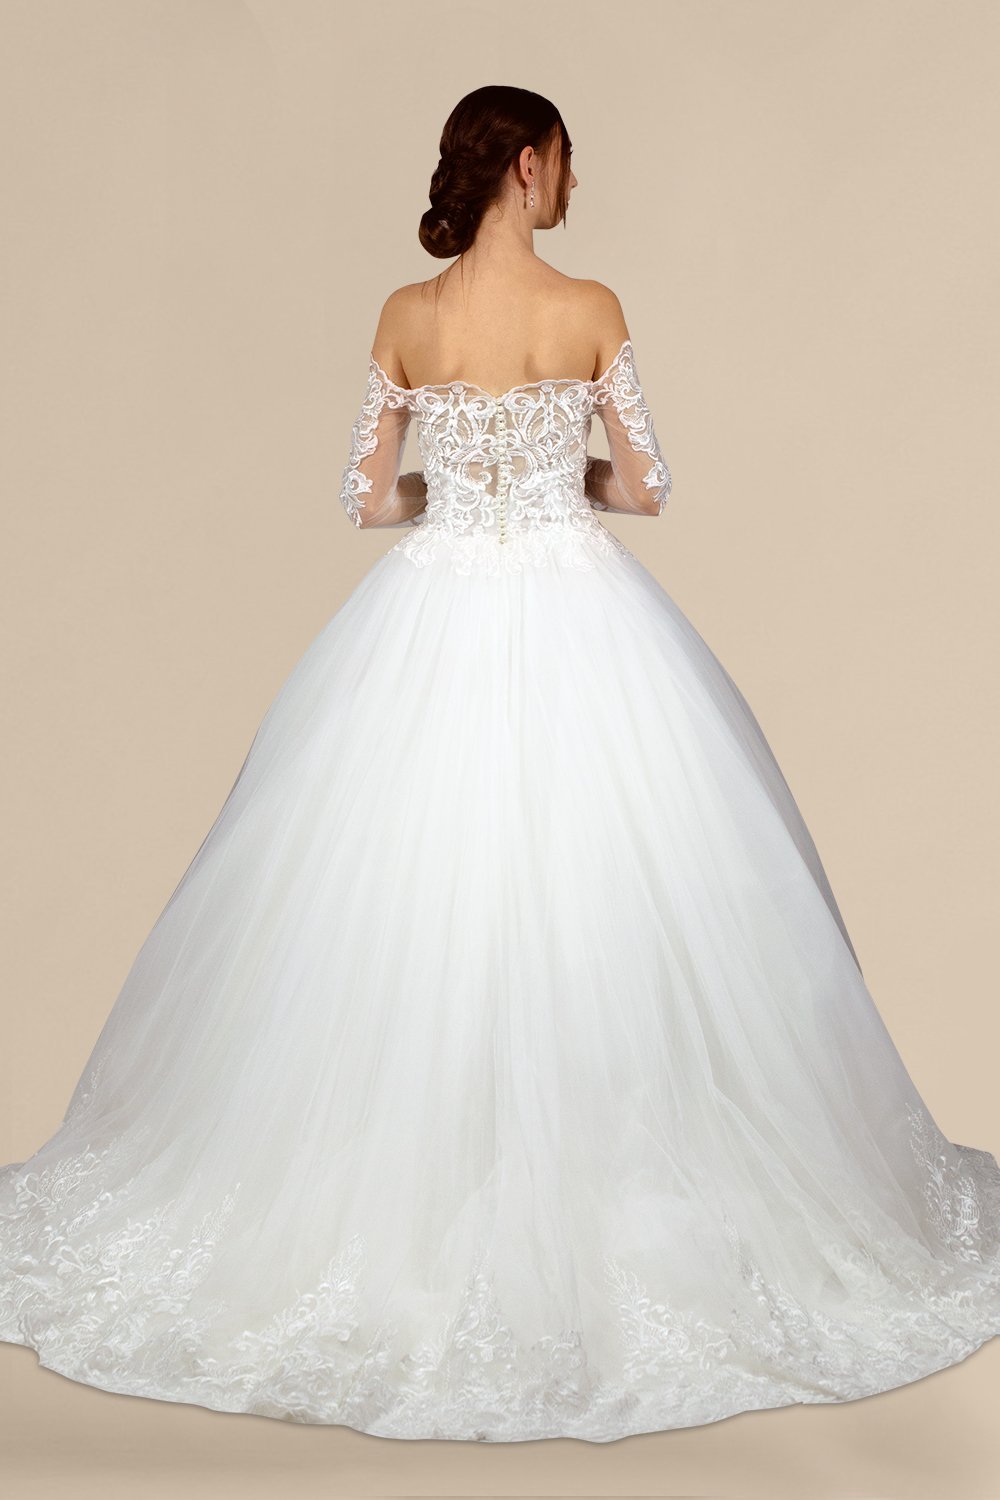 custom made princess wedding gowns australia online envious bridal & formal